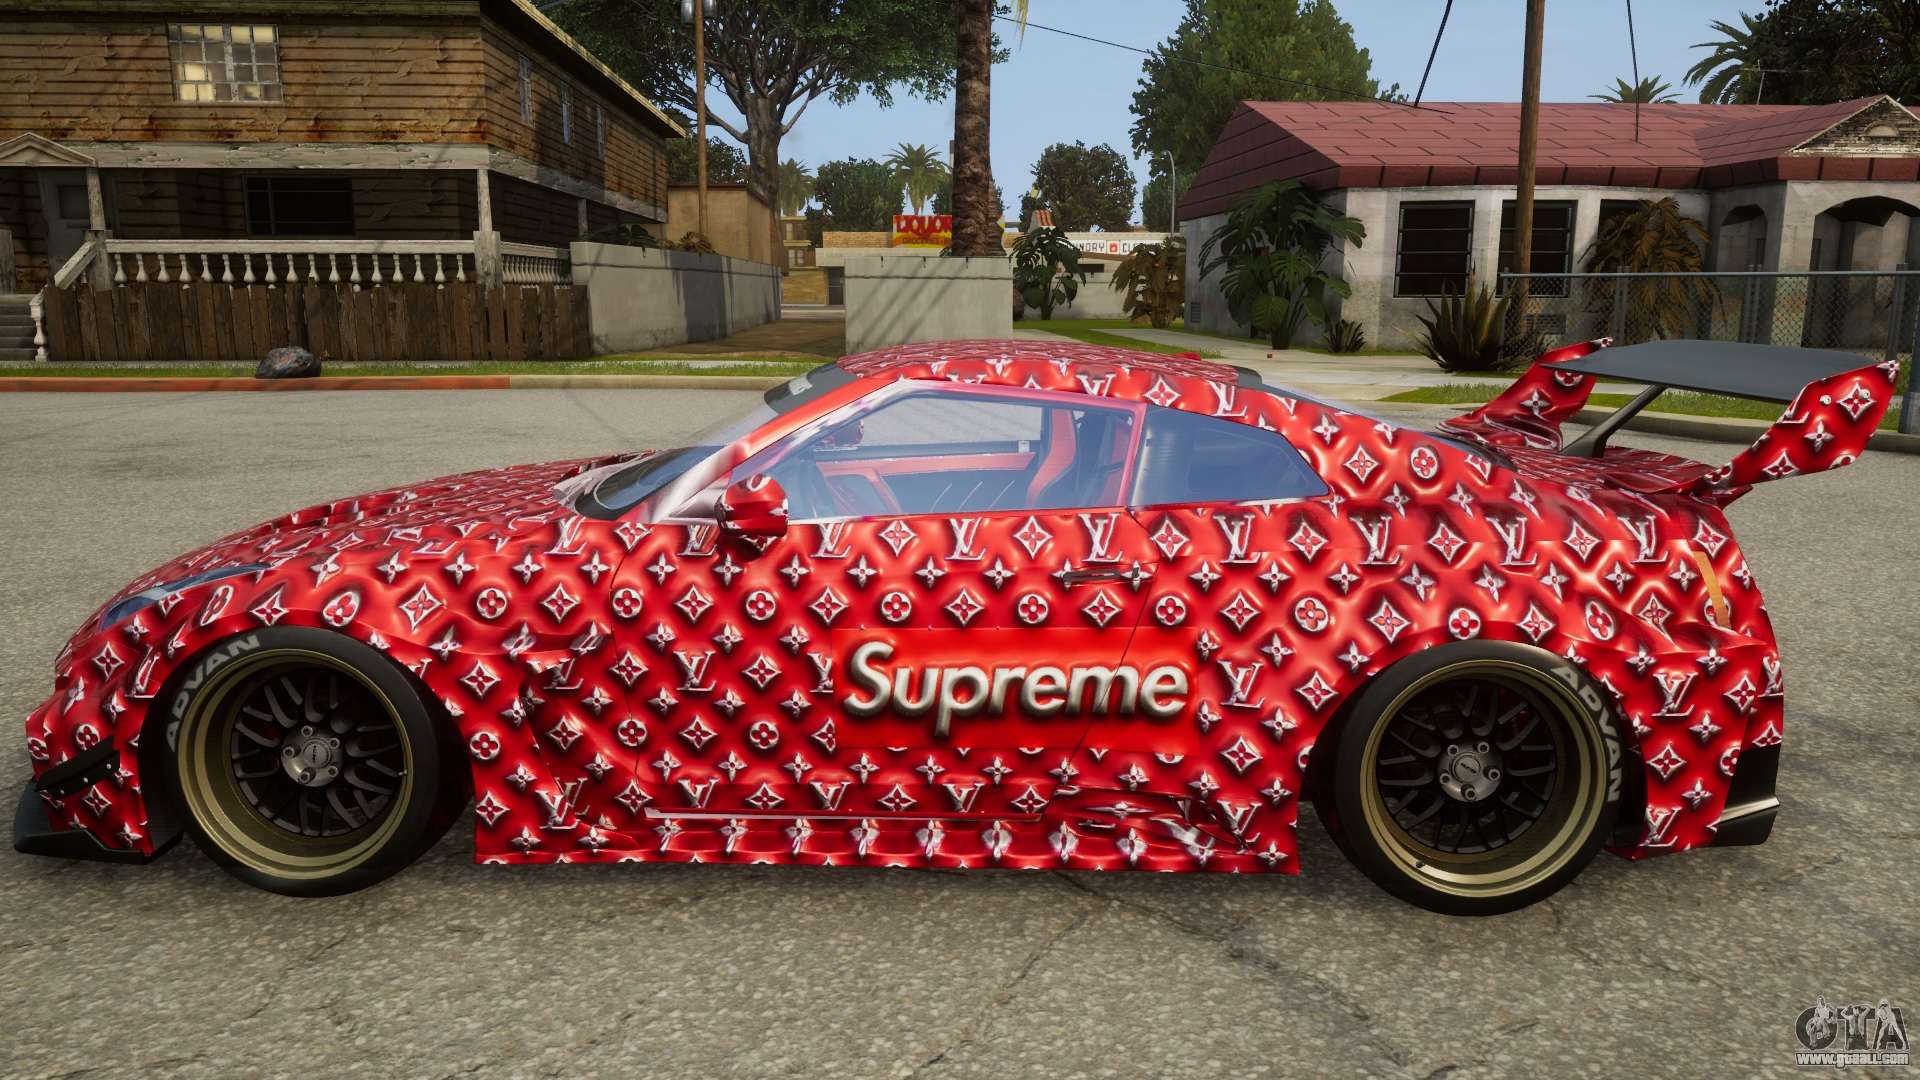 Realistic Supreme X Louis Vuitton Hoodie for GTA San Andreas